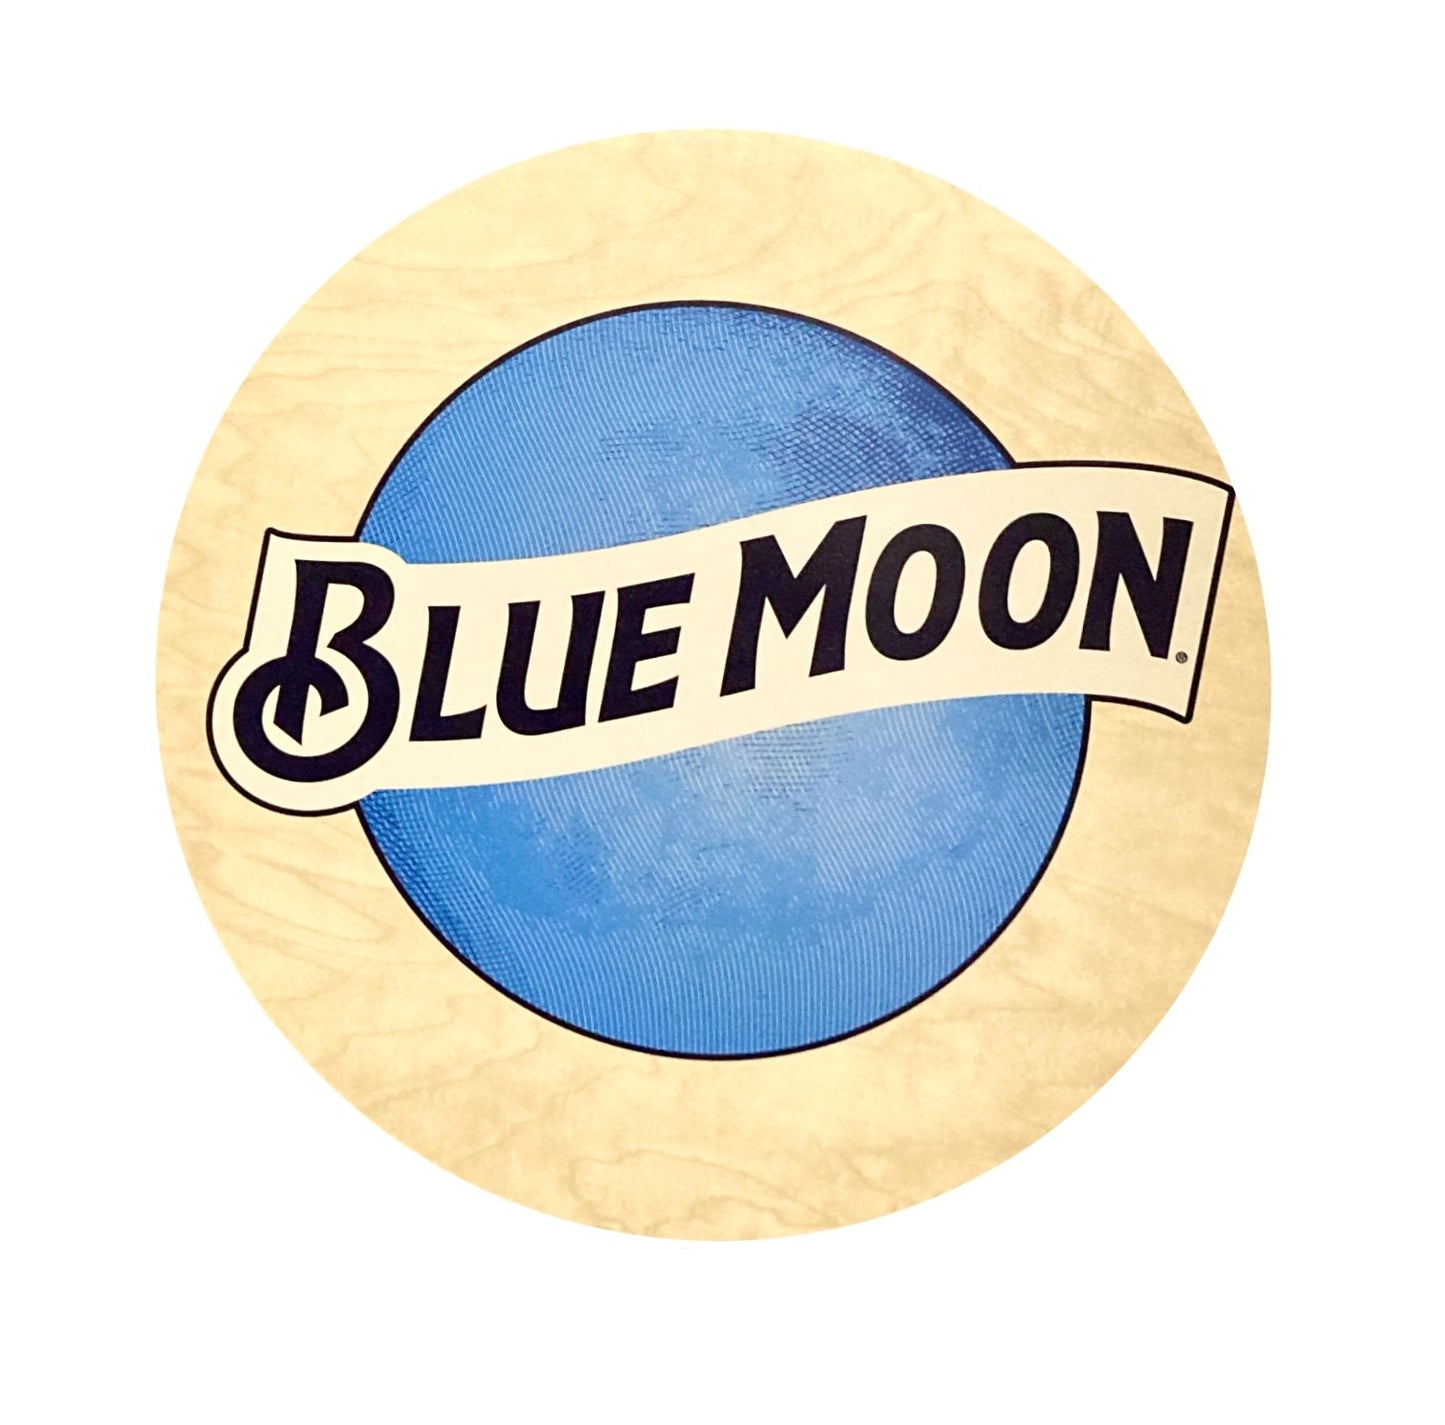 Blue Moon Wooden Sign